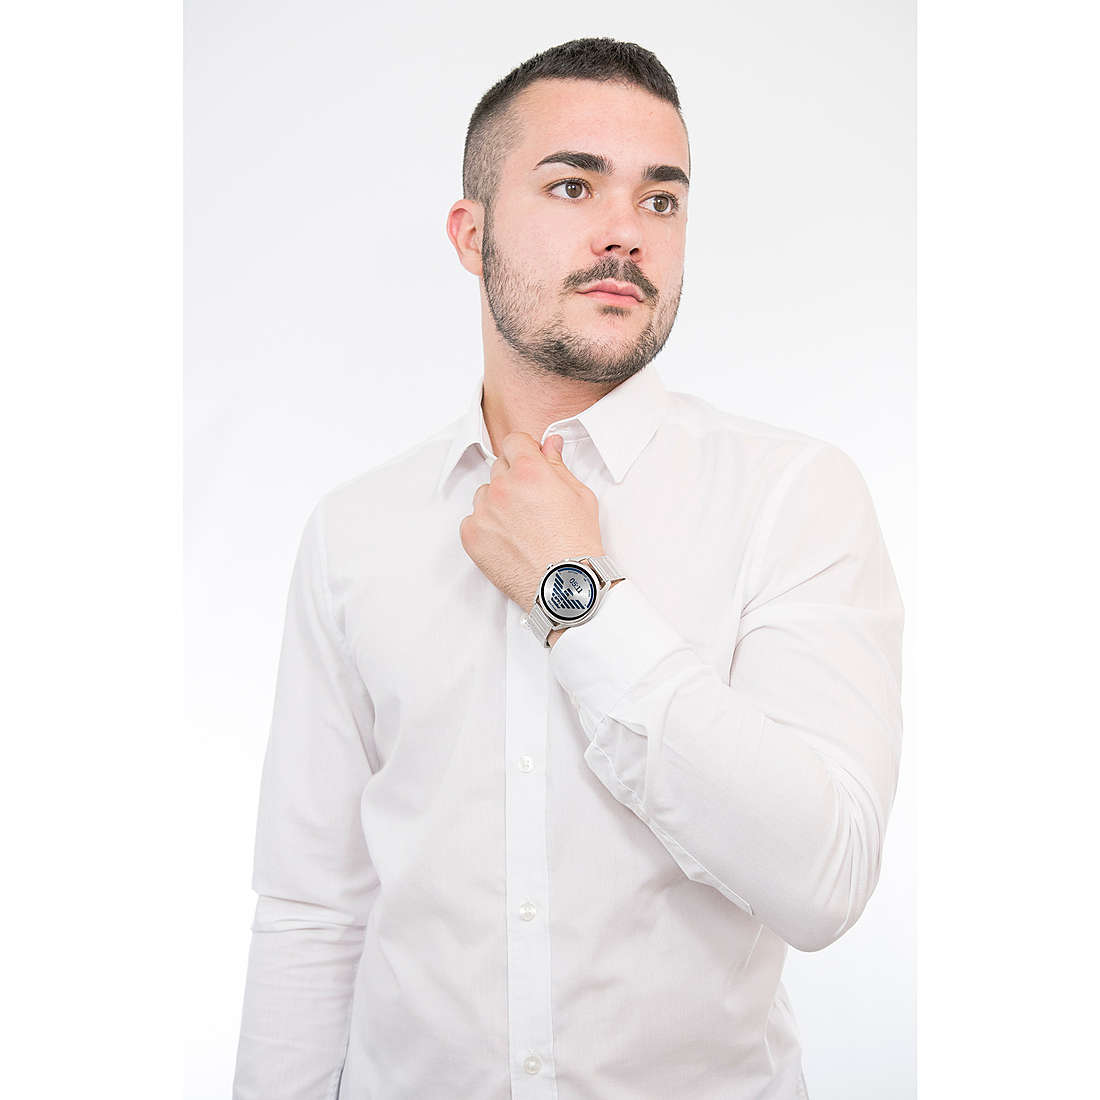 Emporio Armani Smartwatches uomo ART5026 indosso